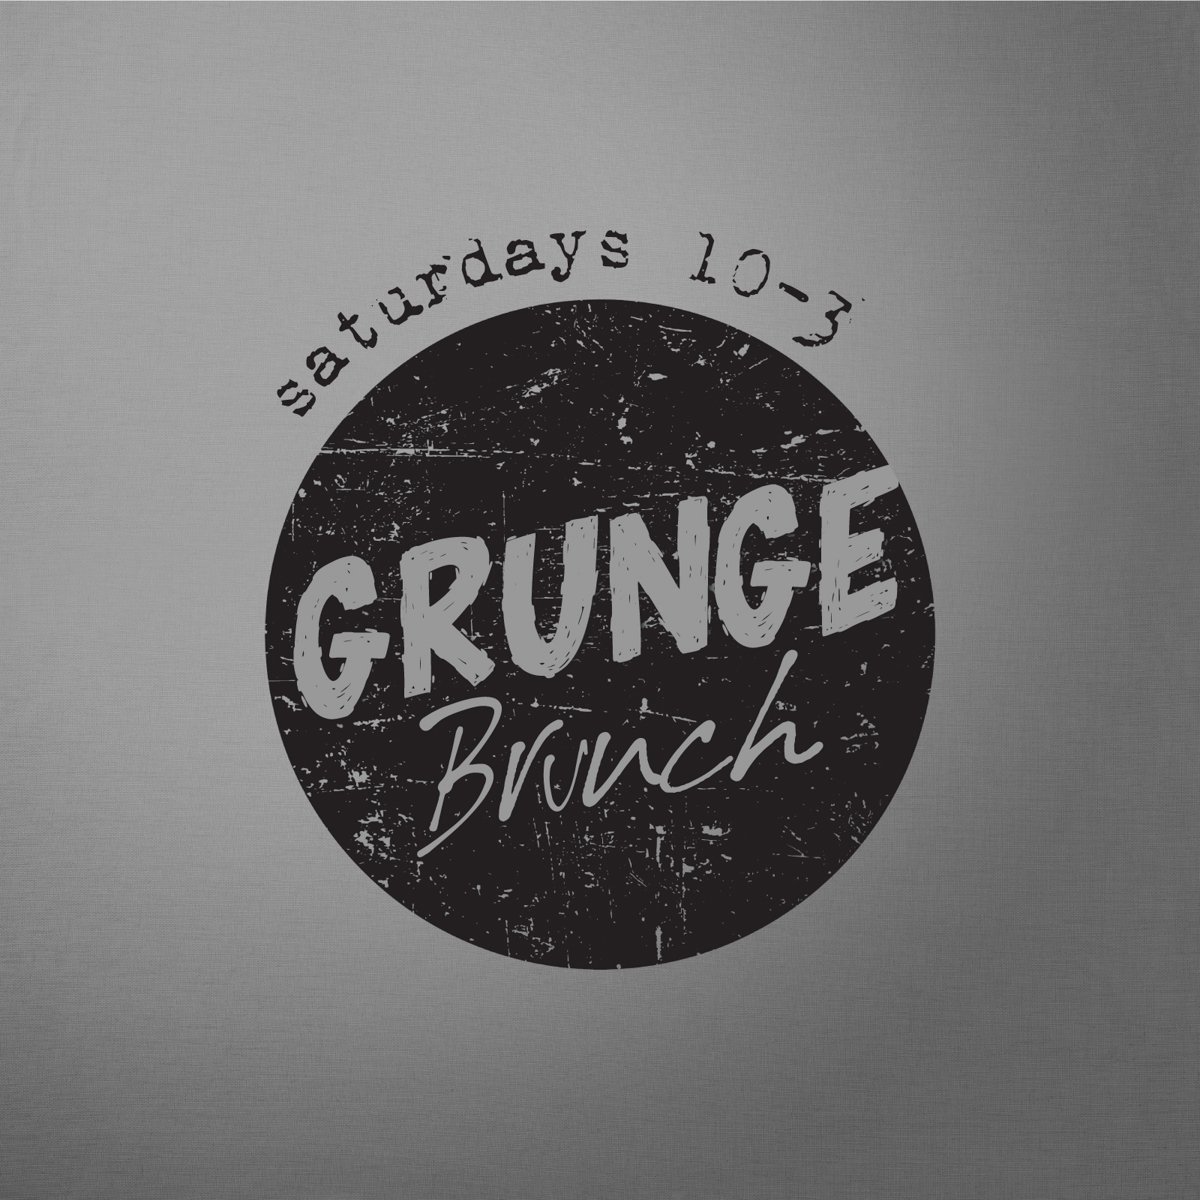 Themed brunch logo.